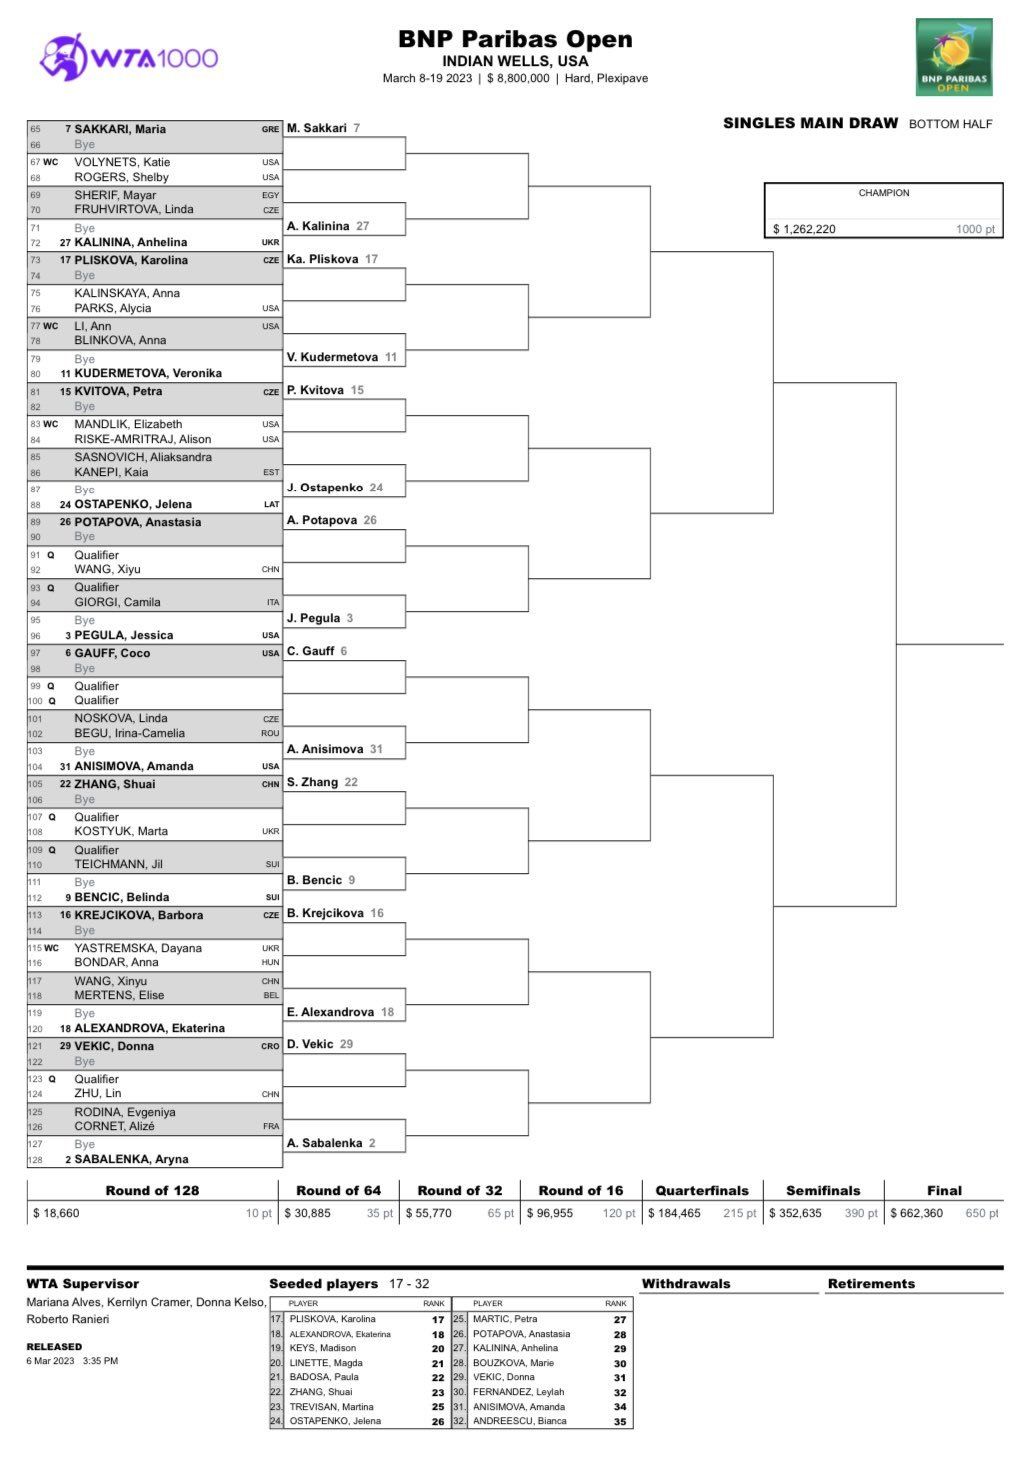 WTA Draw confirmed for 2023 BNP Paribas Open Indian Wells including Swiatek, Pegula, Sabalenka, Jabeur, Gauff, Garcia and Raducanu Tennisuptodate